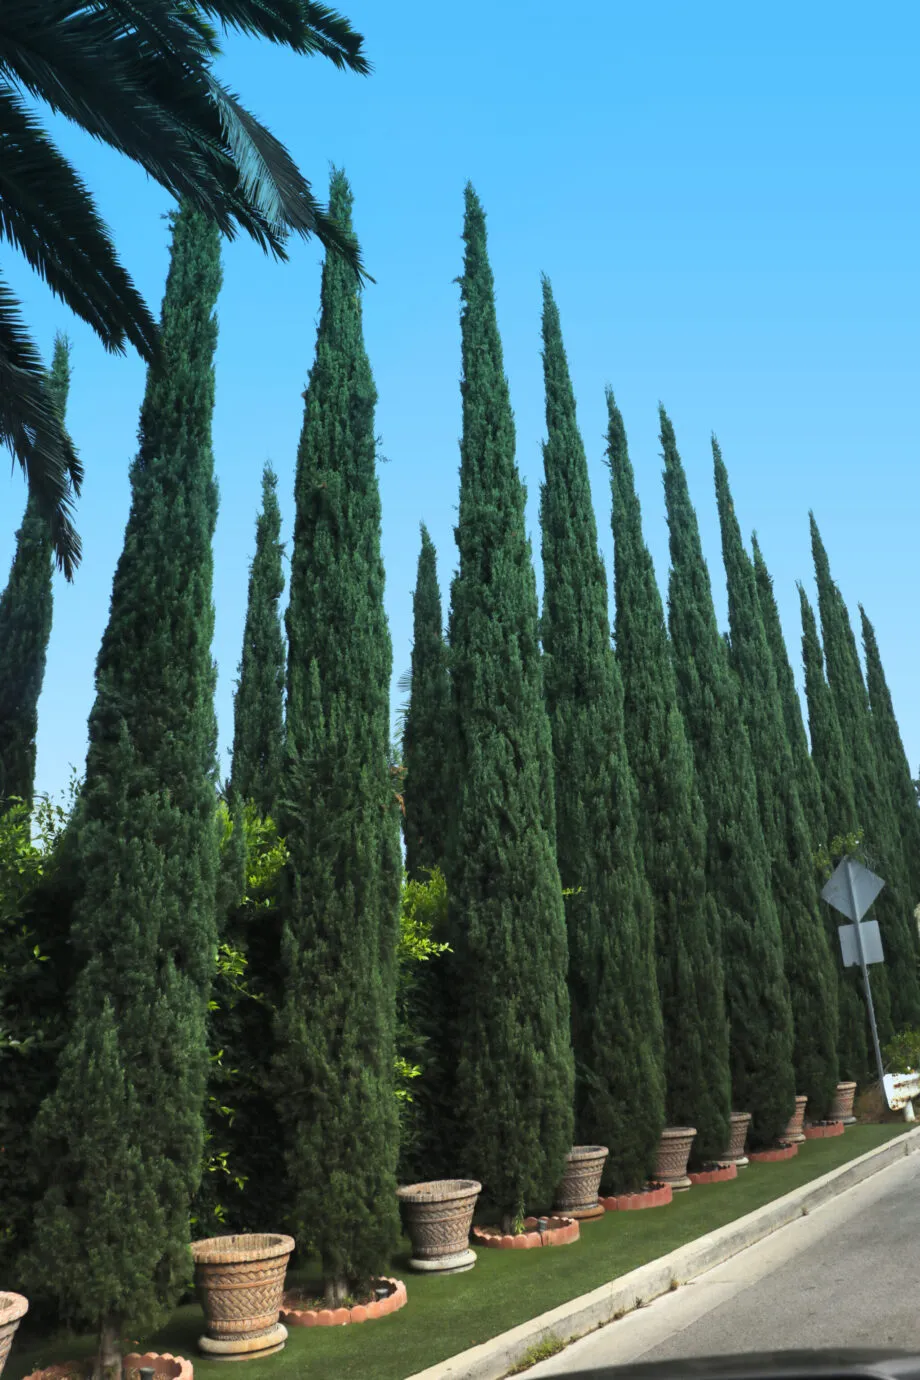 Italian cypress planted